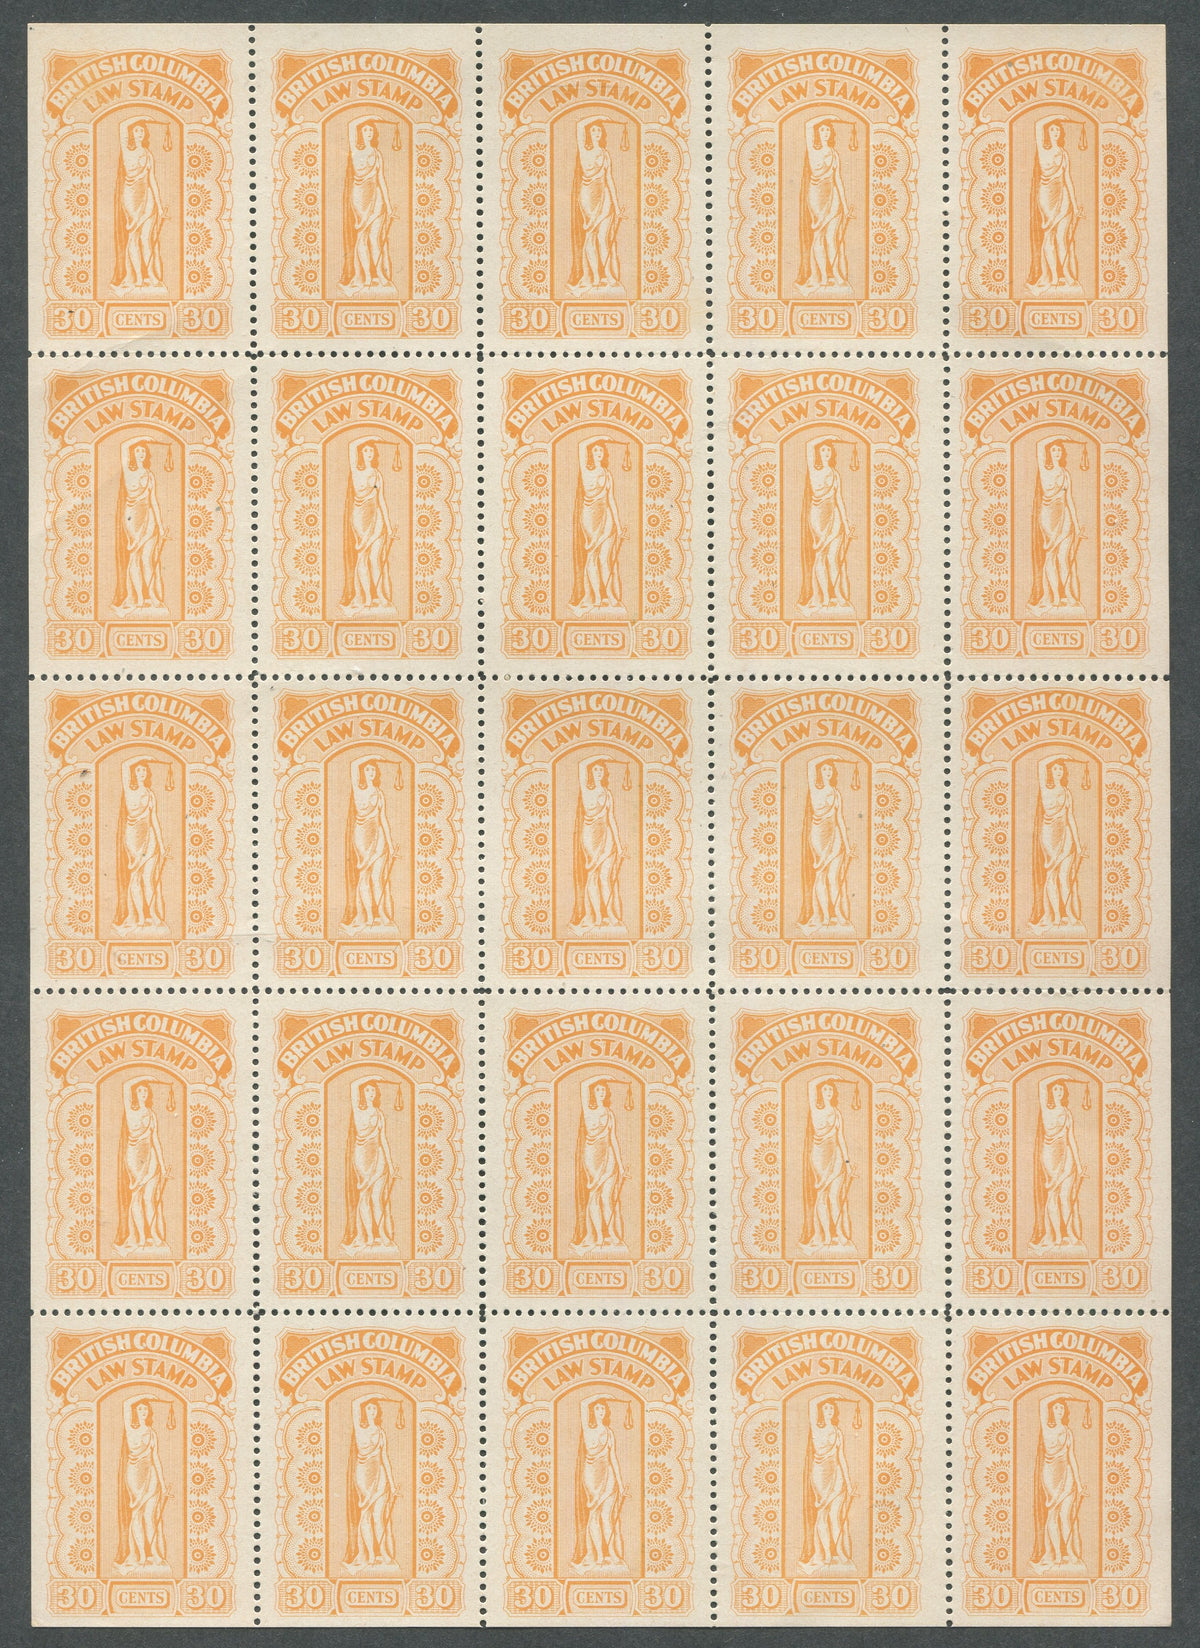 0038BC2007 - BCL38 - Mint Sheet of 25